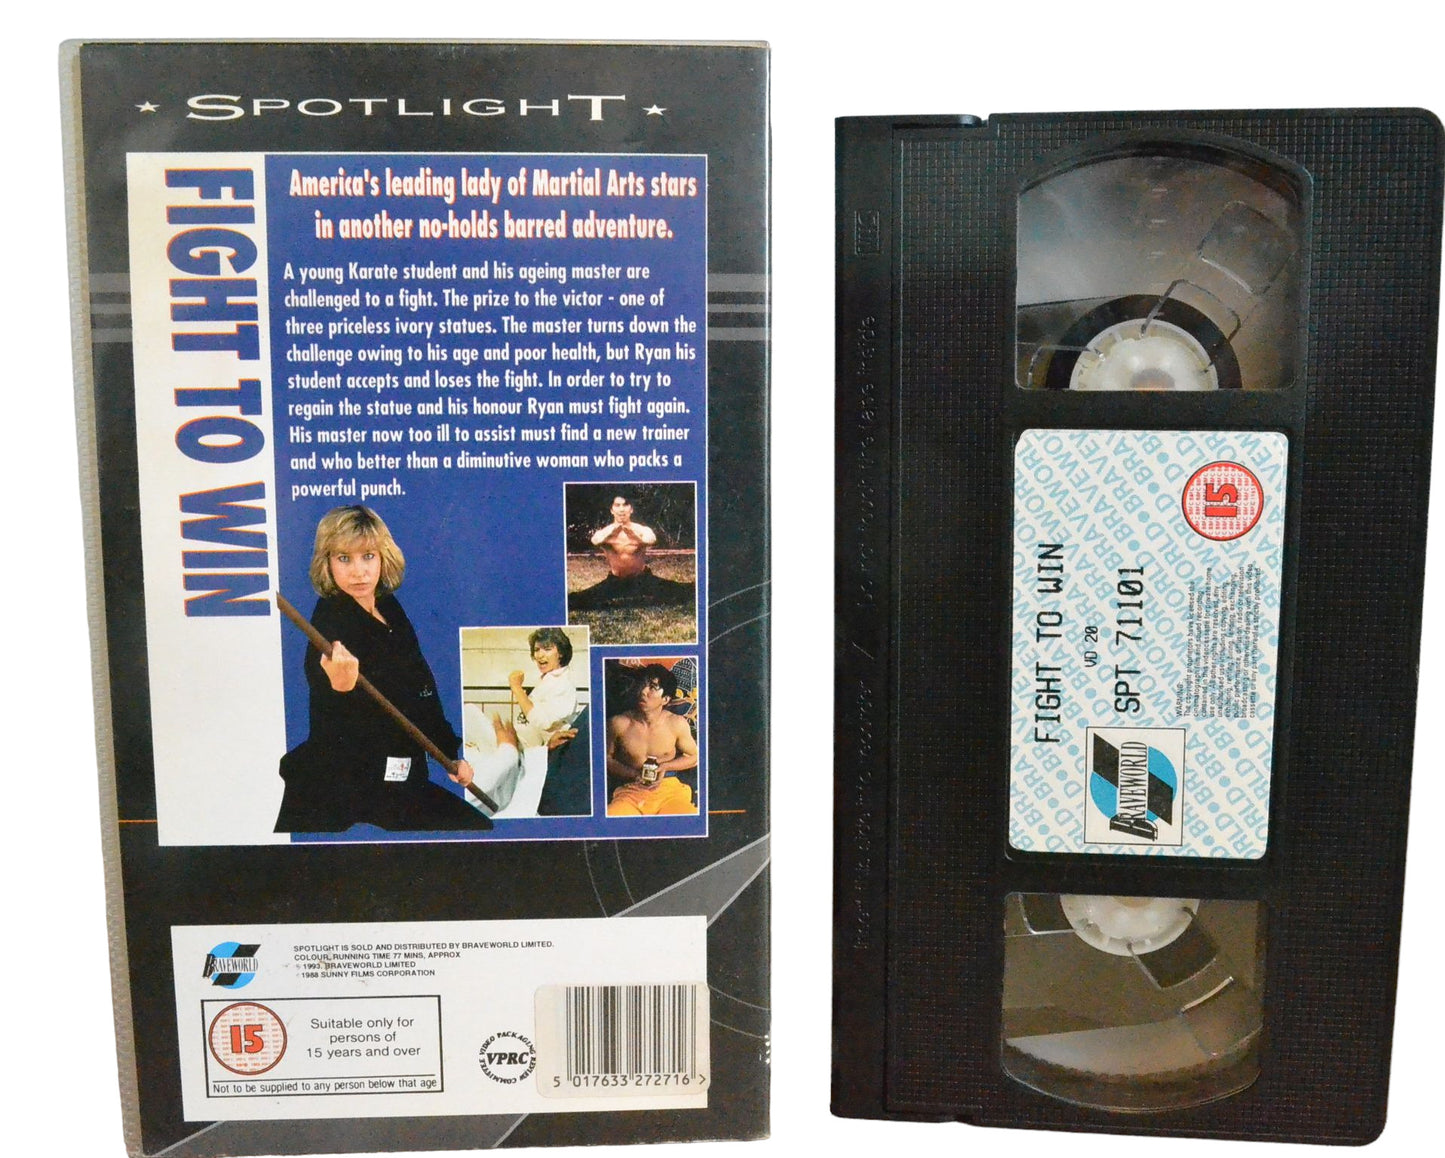 Fight To Win - Cynthia Rothrock - Braveworld - SPT71101 - Action - Pal - VHS-